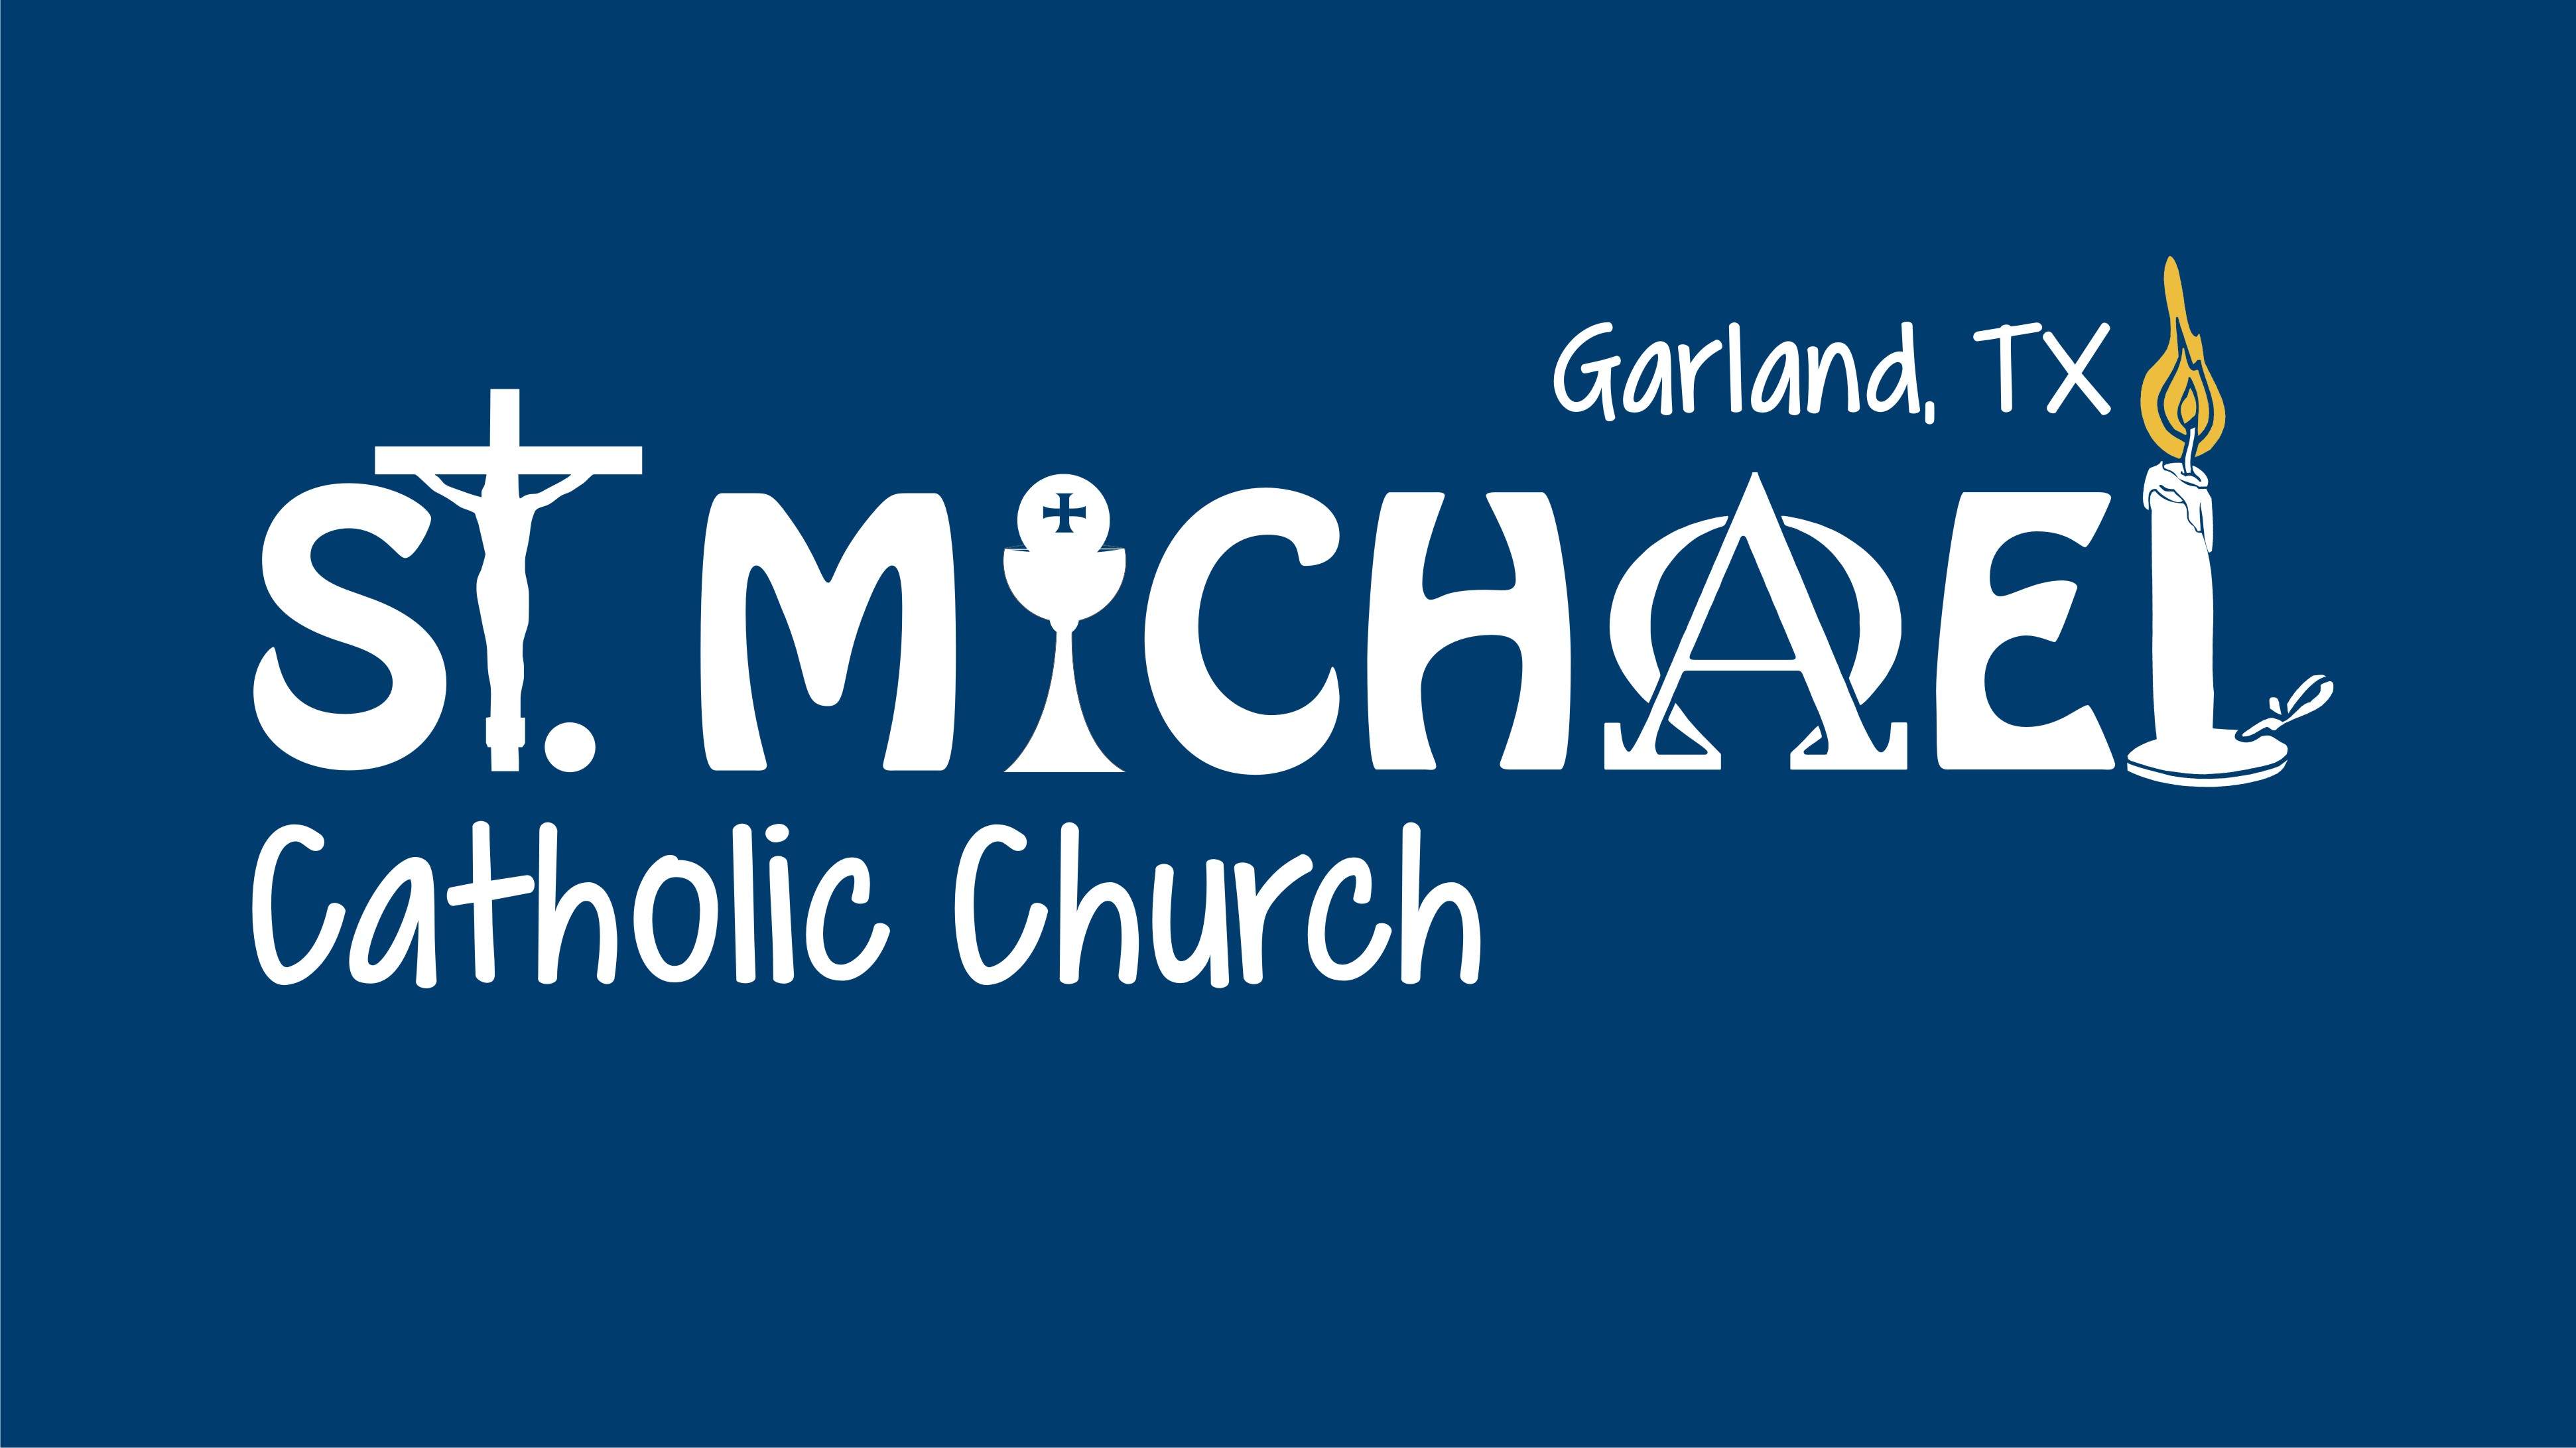 St. Michael's Catholic Church - Garland